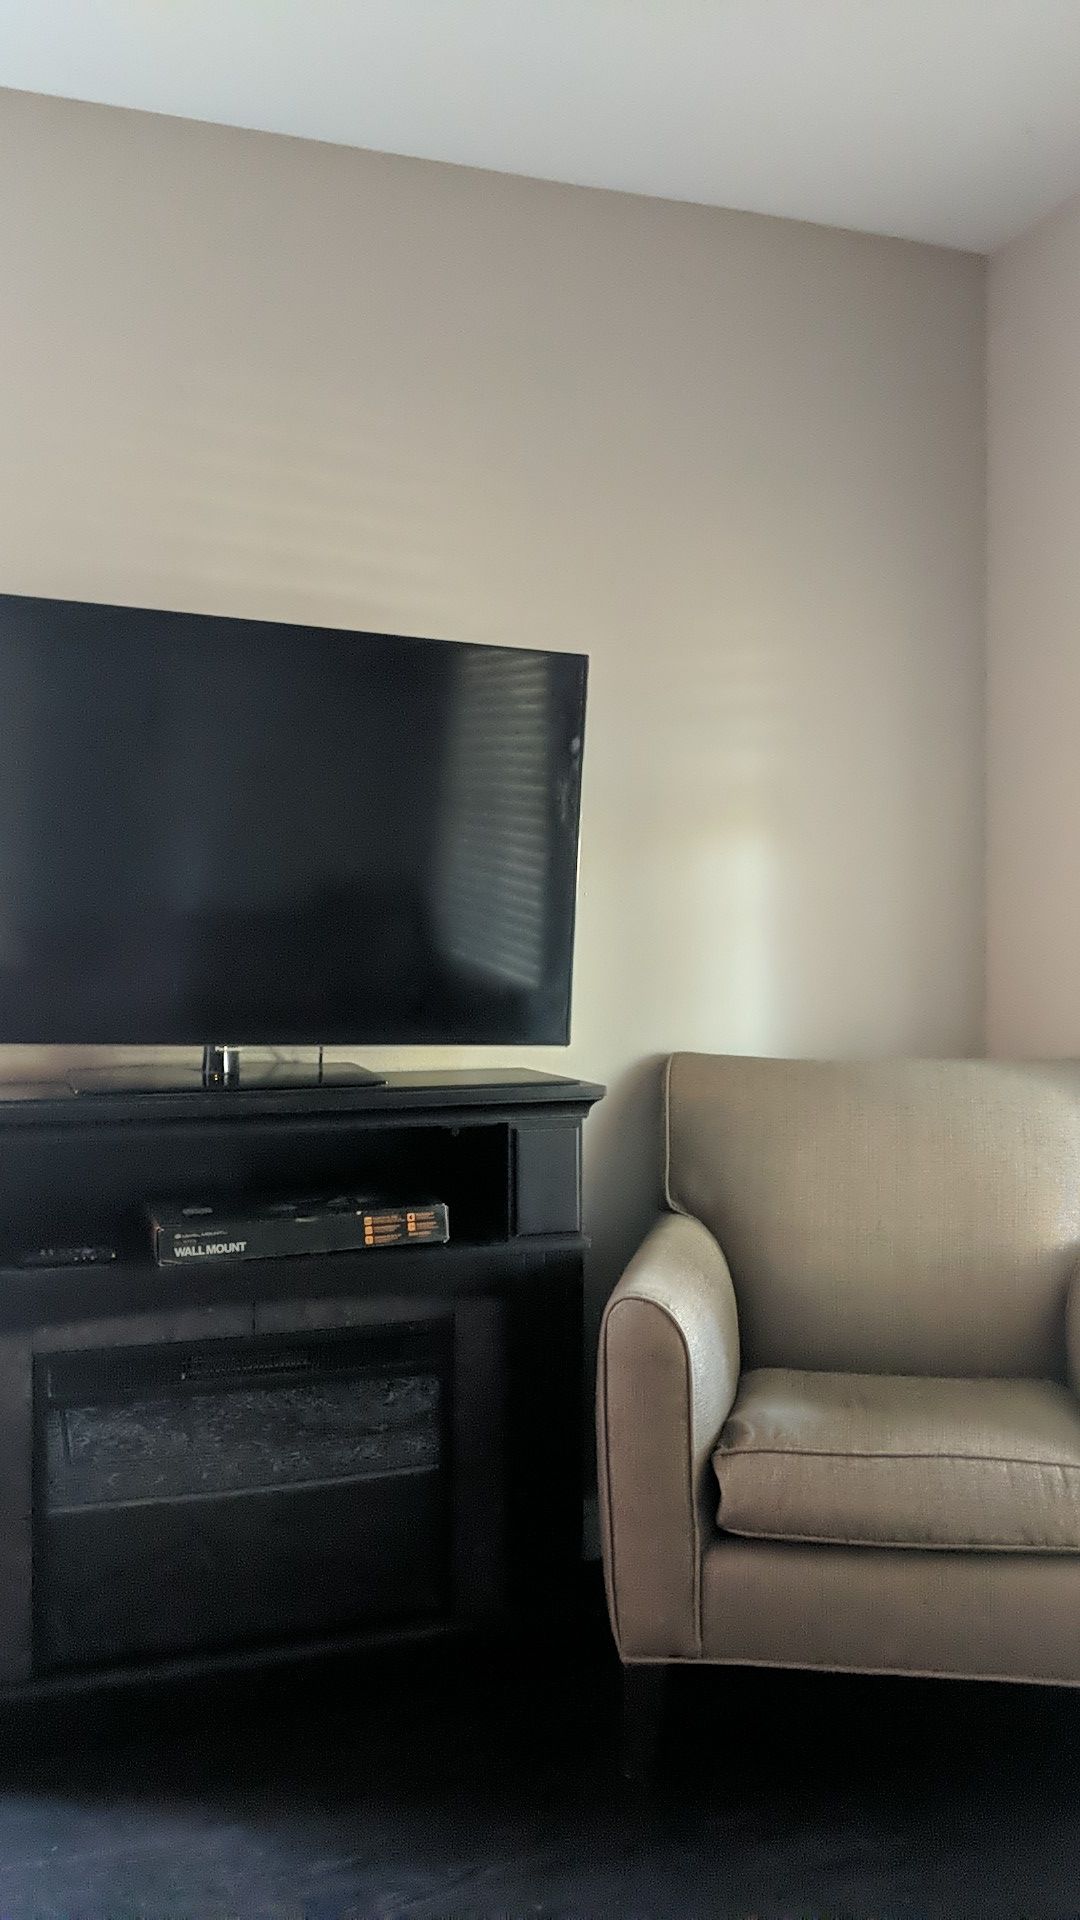 1080p Smart T.V., Wall Mount, Fireplace, & Armchair